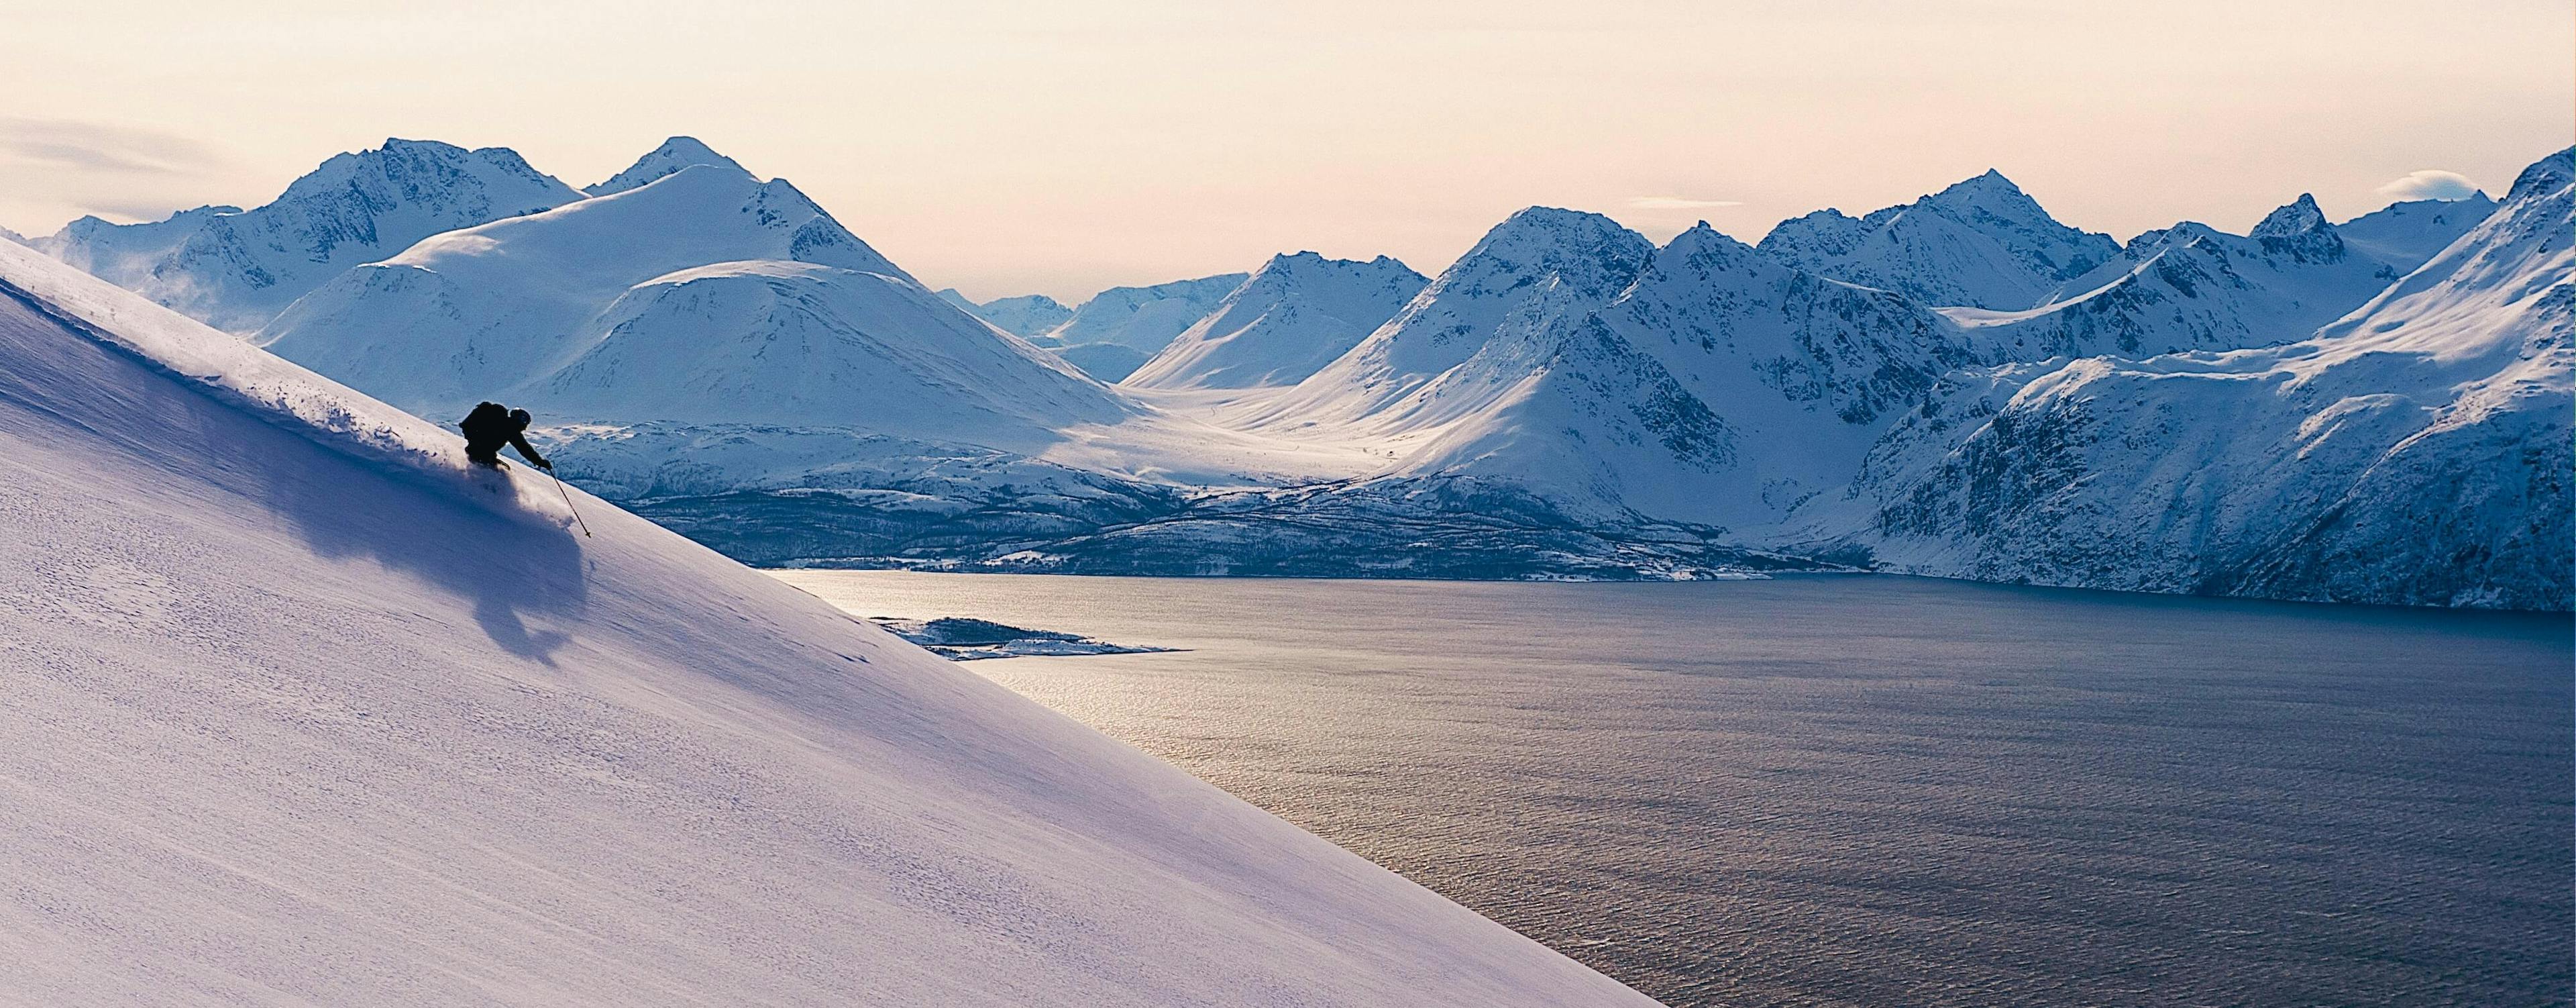 Ski Touring in the Arctic